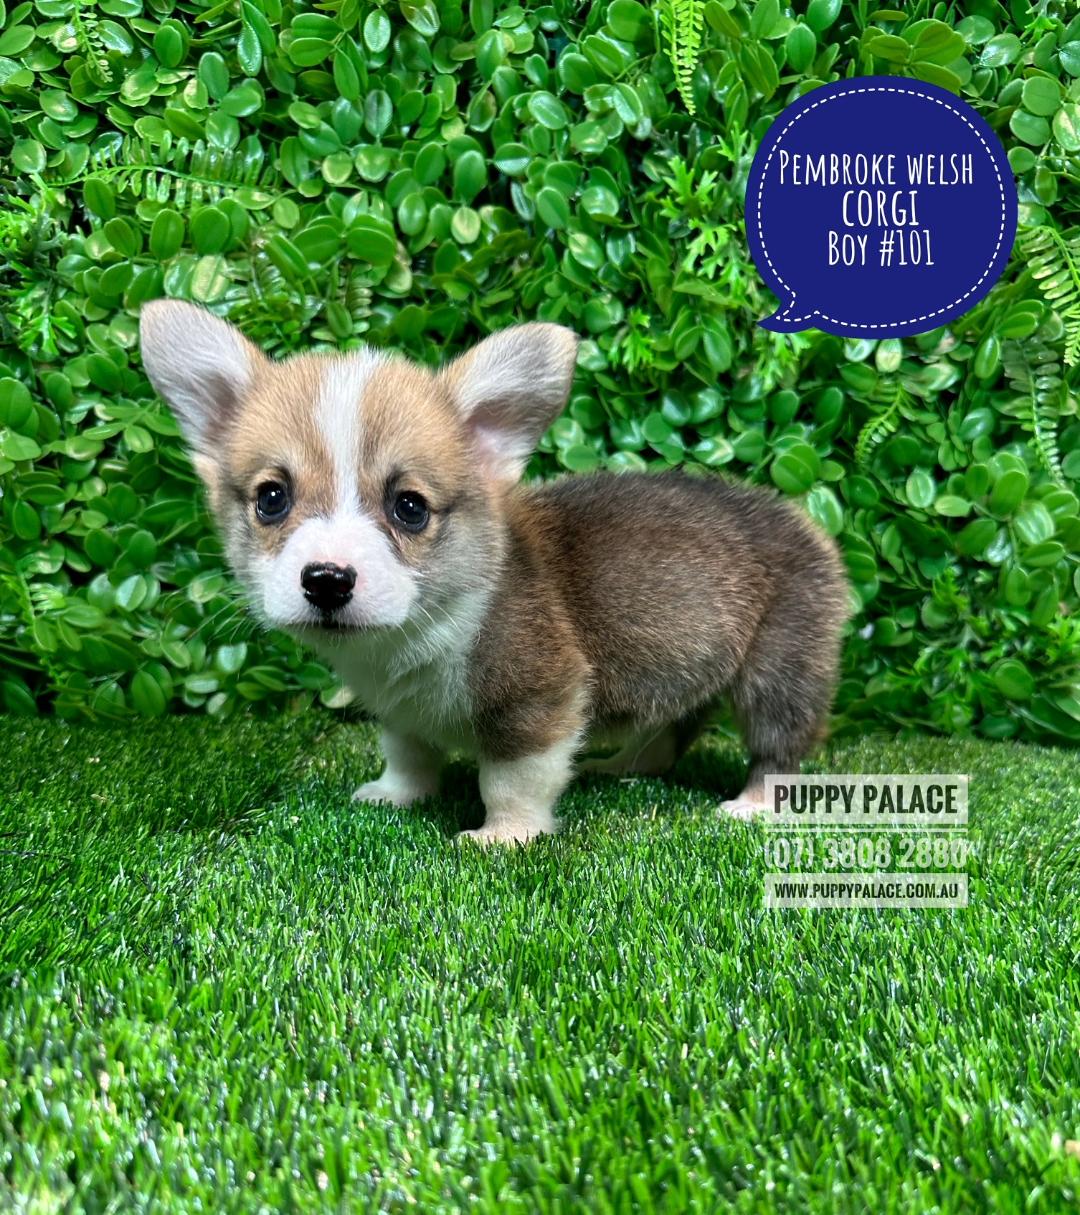 $2295 – Pembroke Welsh Corgi Puppies for sale Brisbane – Bobtail Boy. My 2nd VACCINATION HAS BEEN DONE. VALUE $100